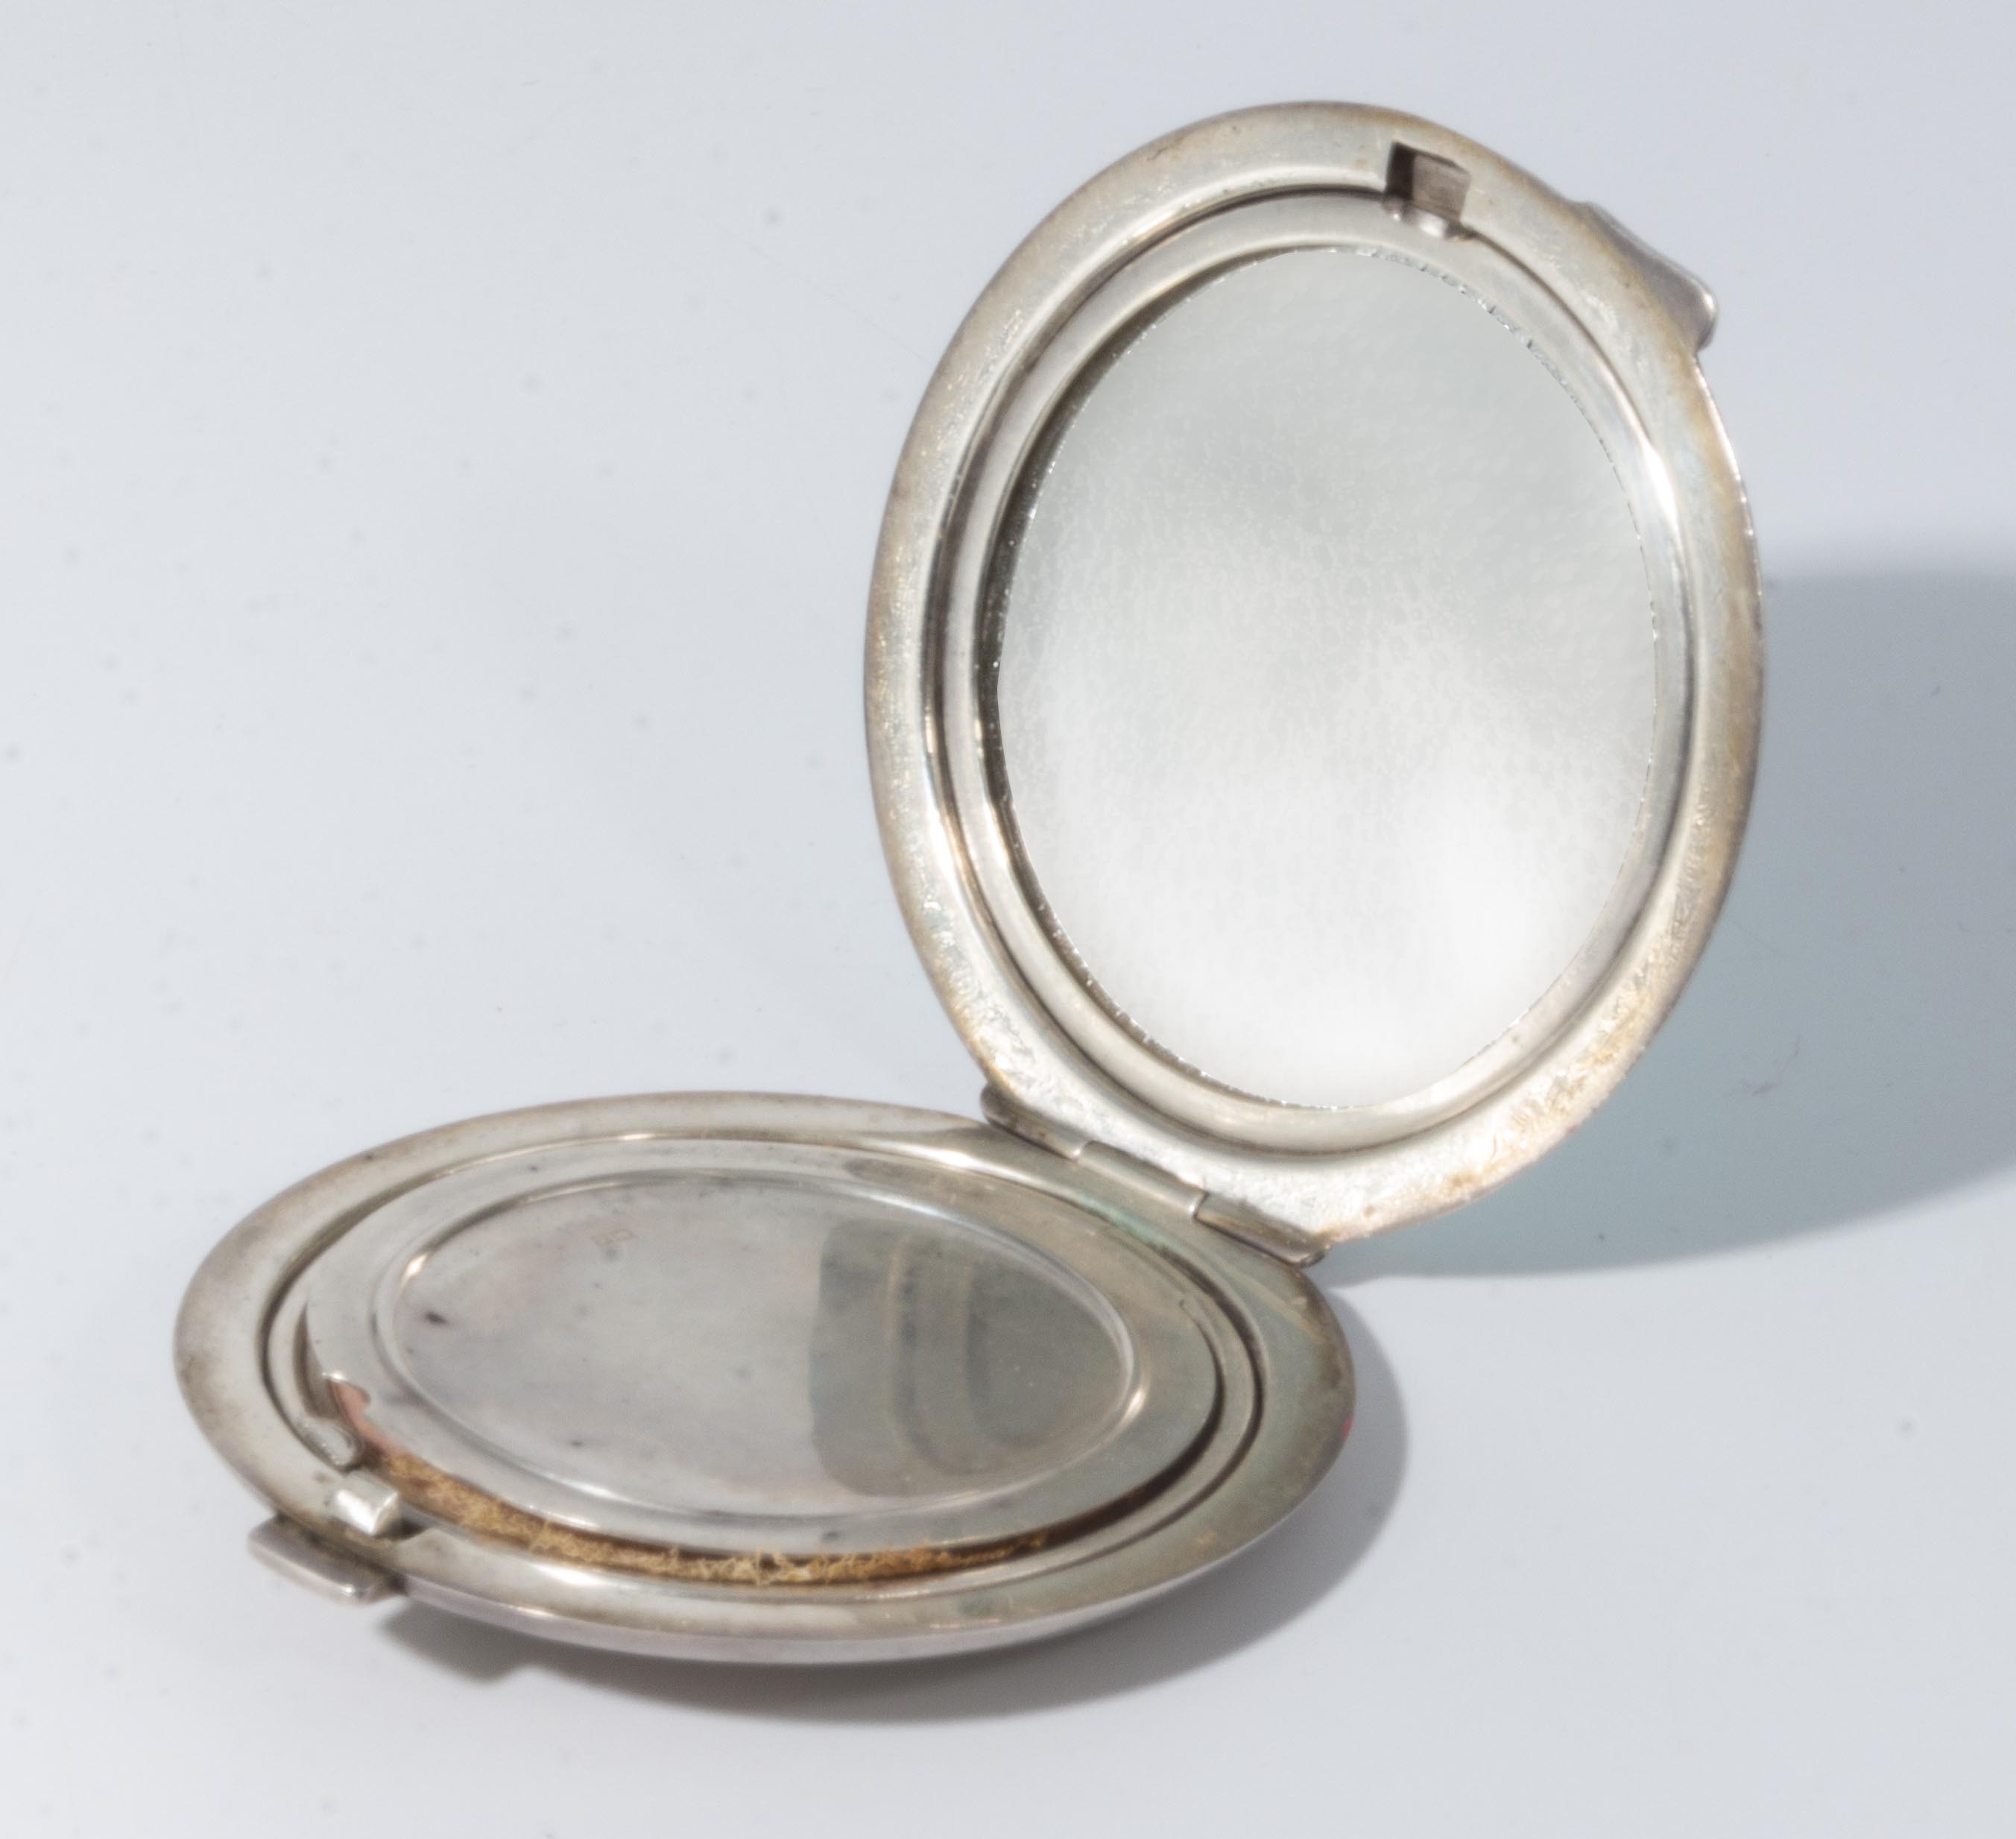 A silver enamel powder compact - Image 2 of 3